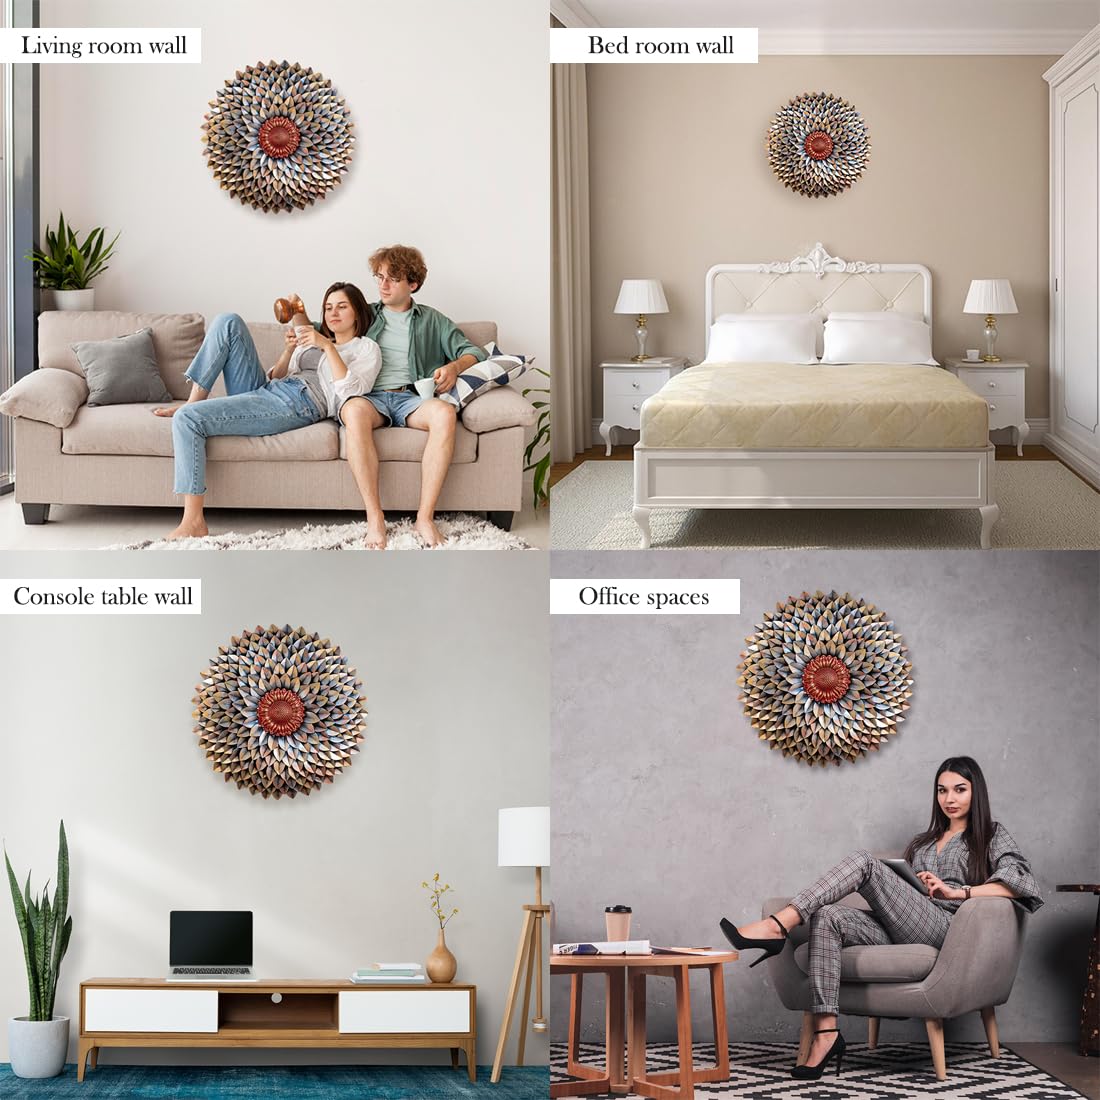 10 Creative Ideas for Living Room Wall Decor